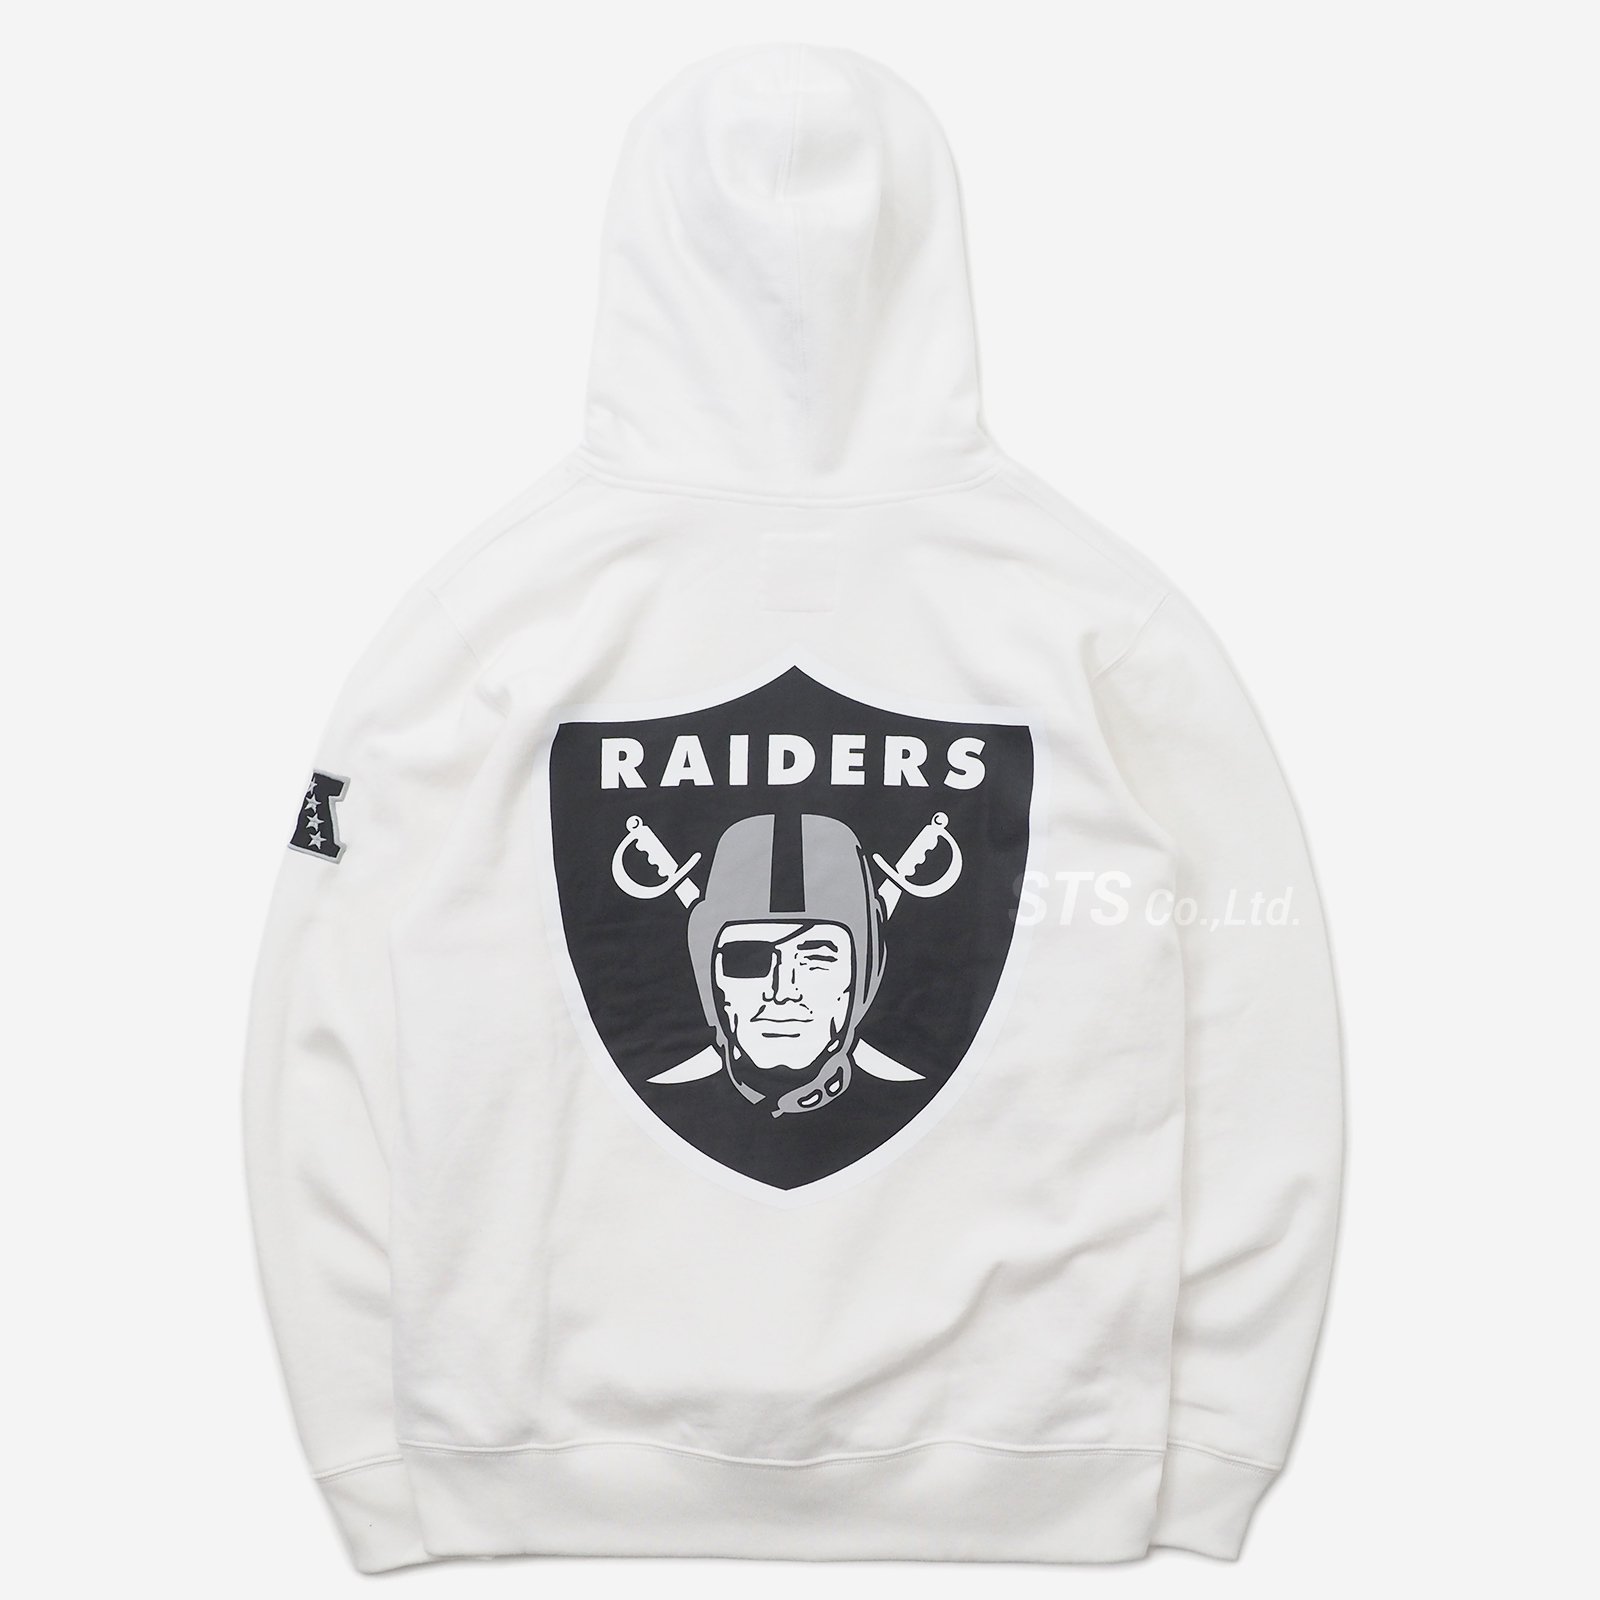 Supreme NFL Raiders Hooded Sweatshirt